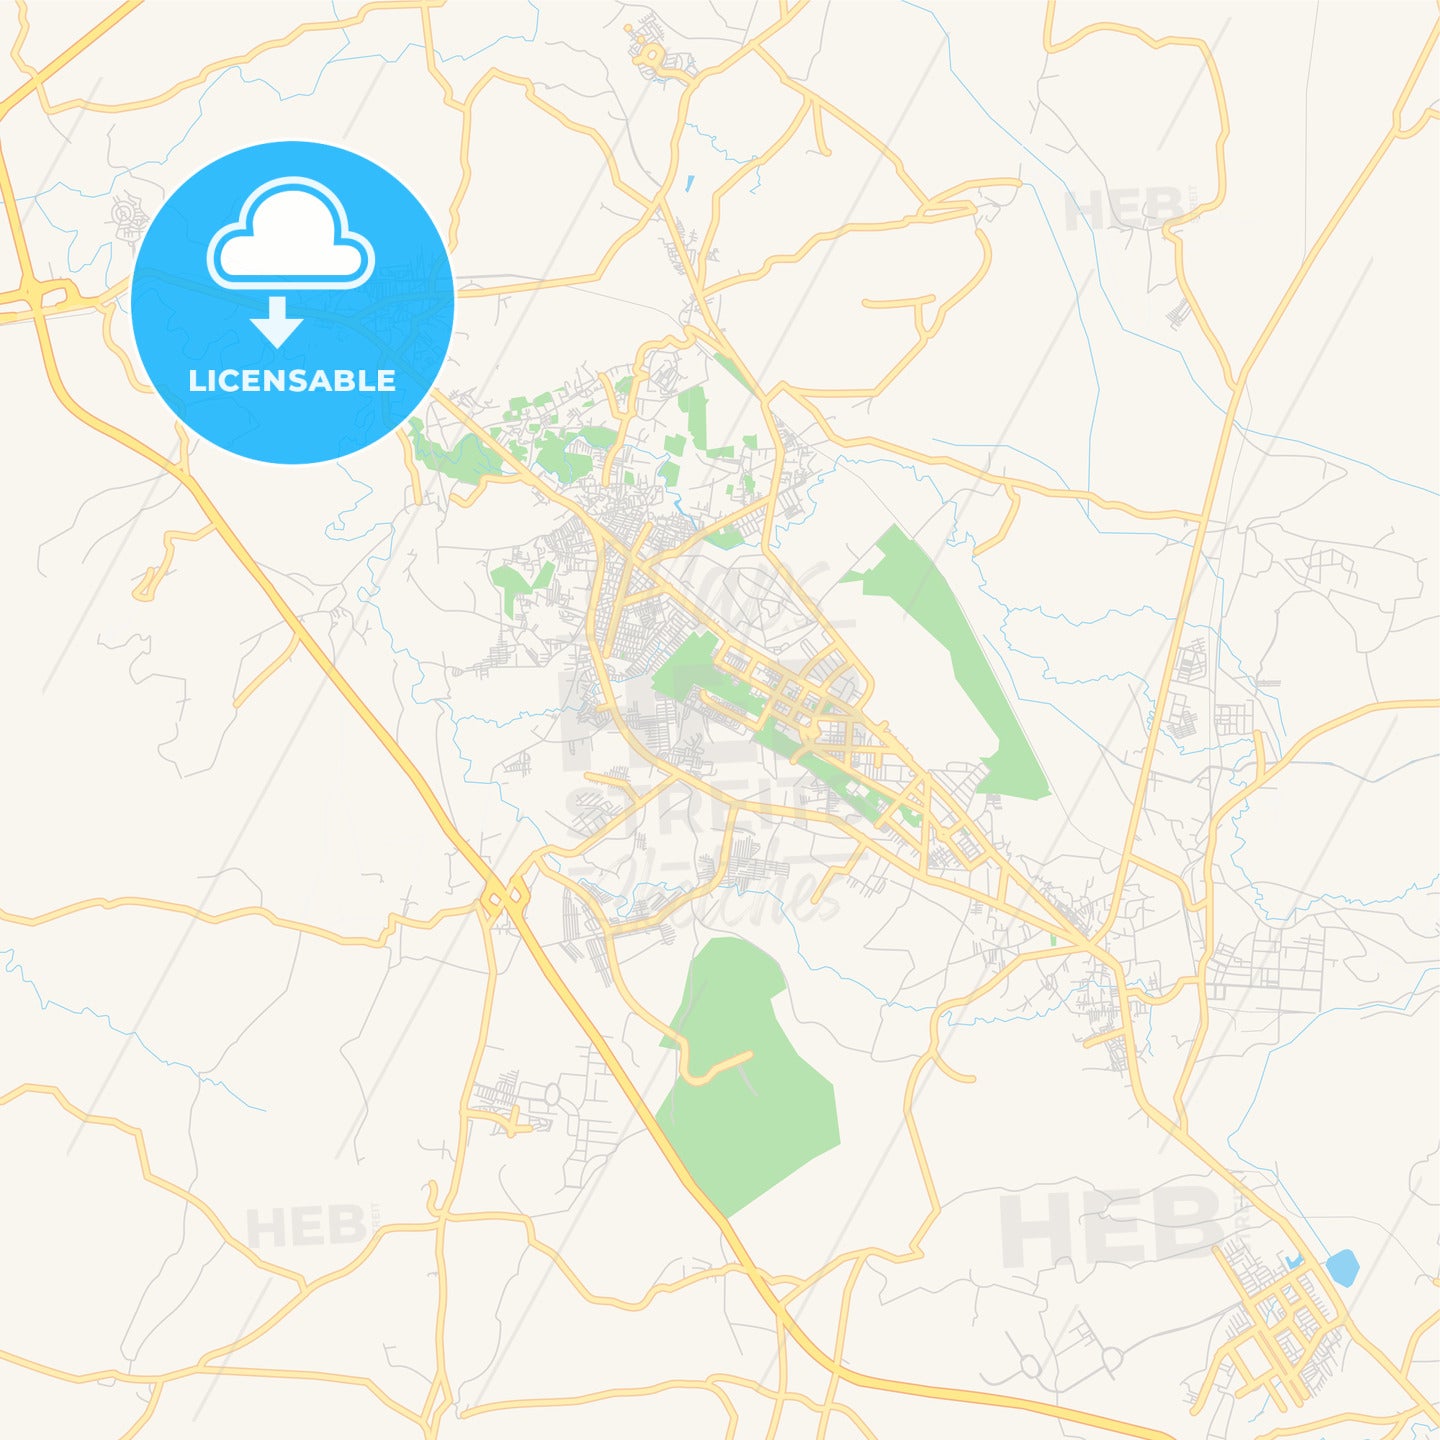 Printable street map of Wah Cantonment, Pakistan